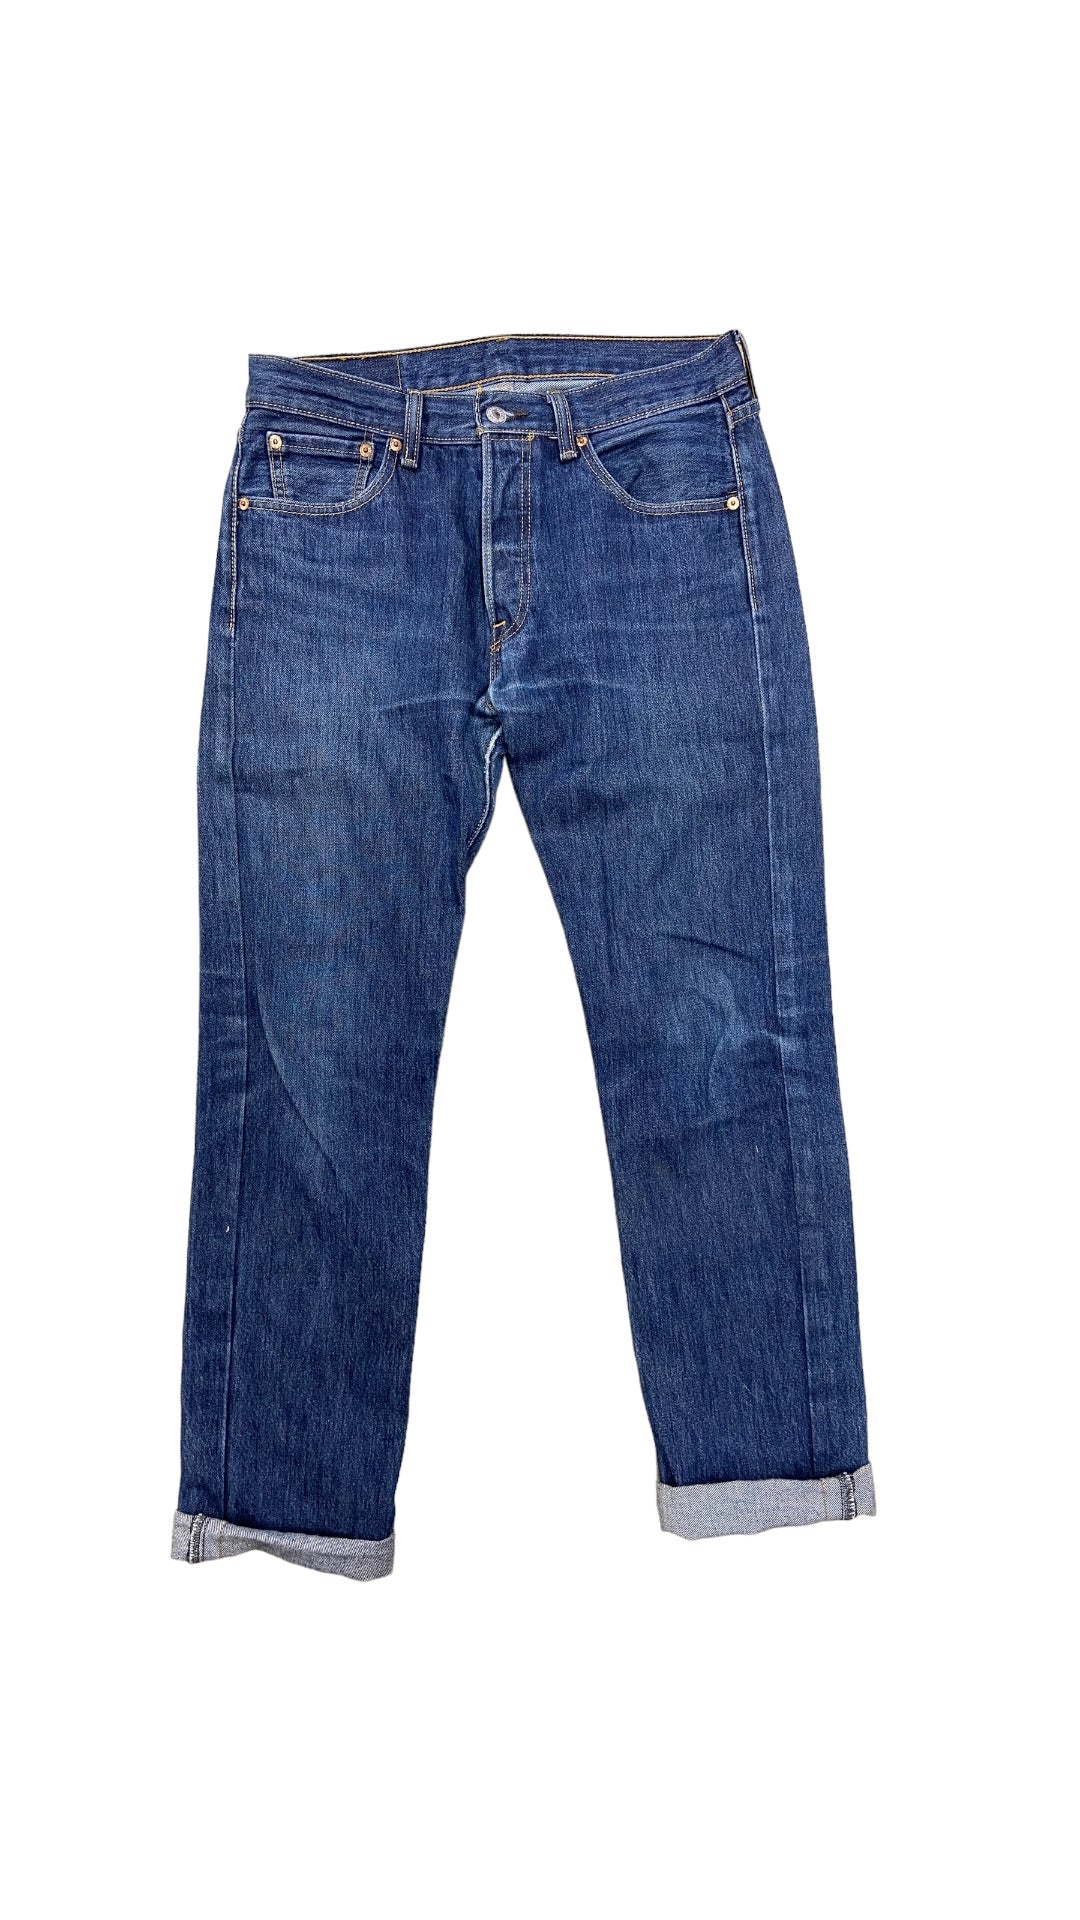 VTG Levi's 501 Dark Wash Blue Denim Jeans Sz 30x32